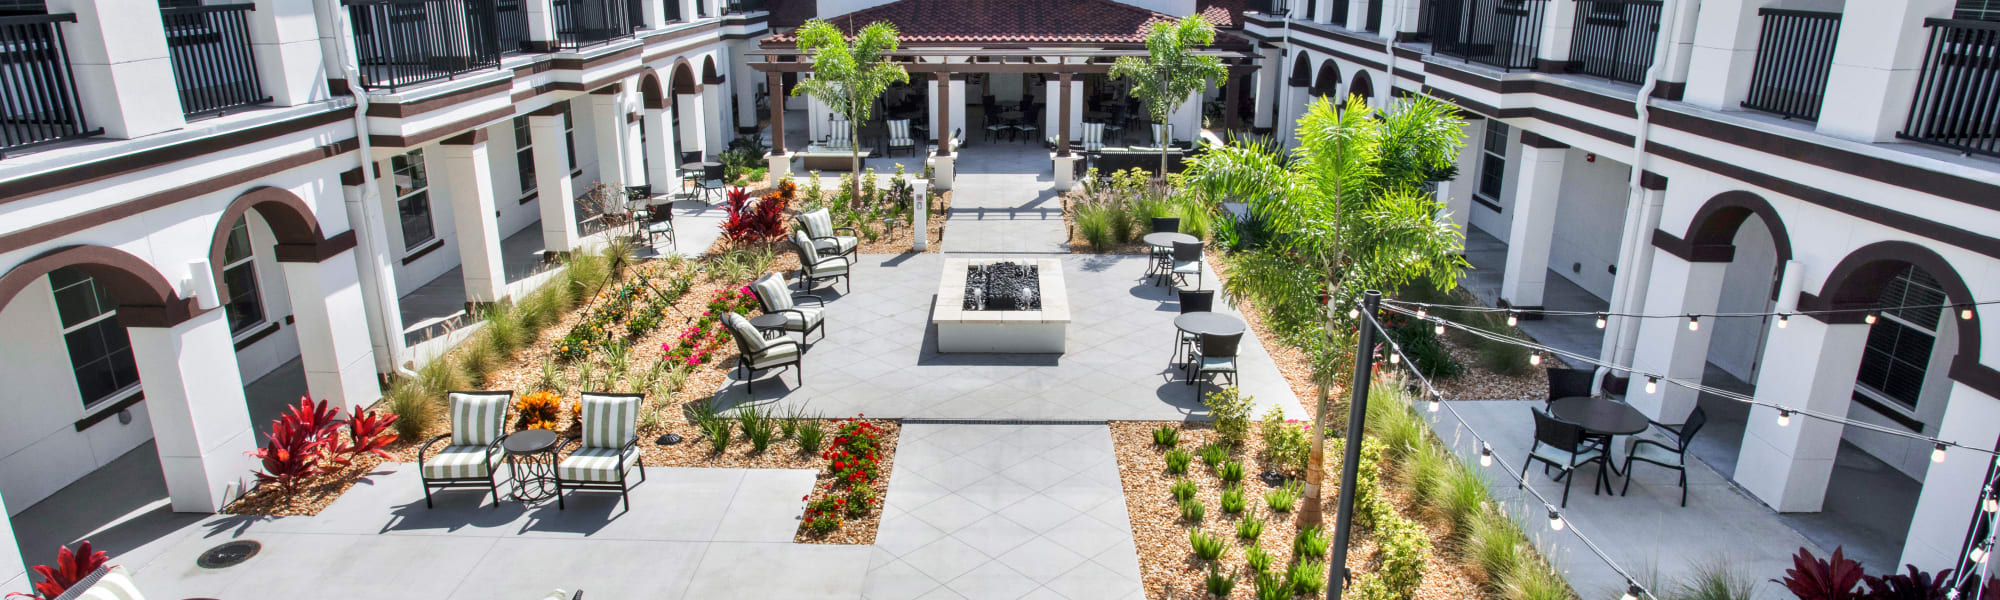 courtyard at The Blake at LPGA building in Daytona Beach, Florida